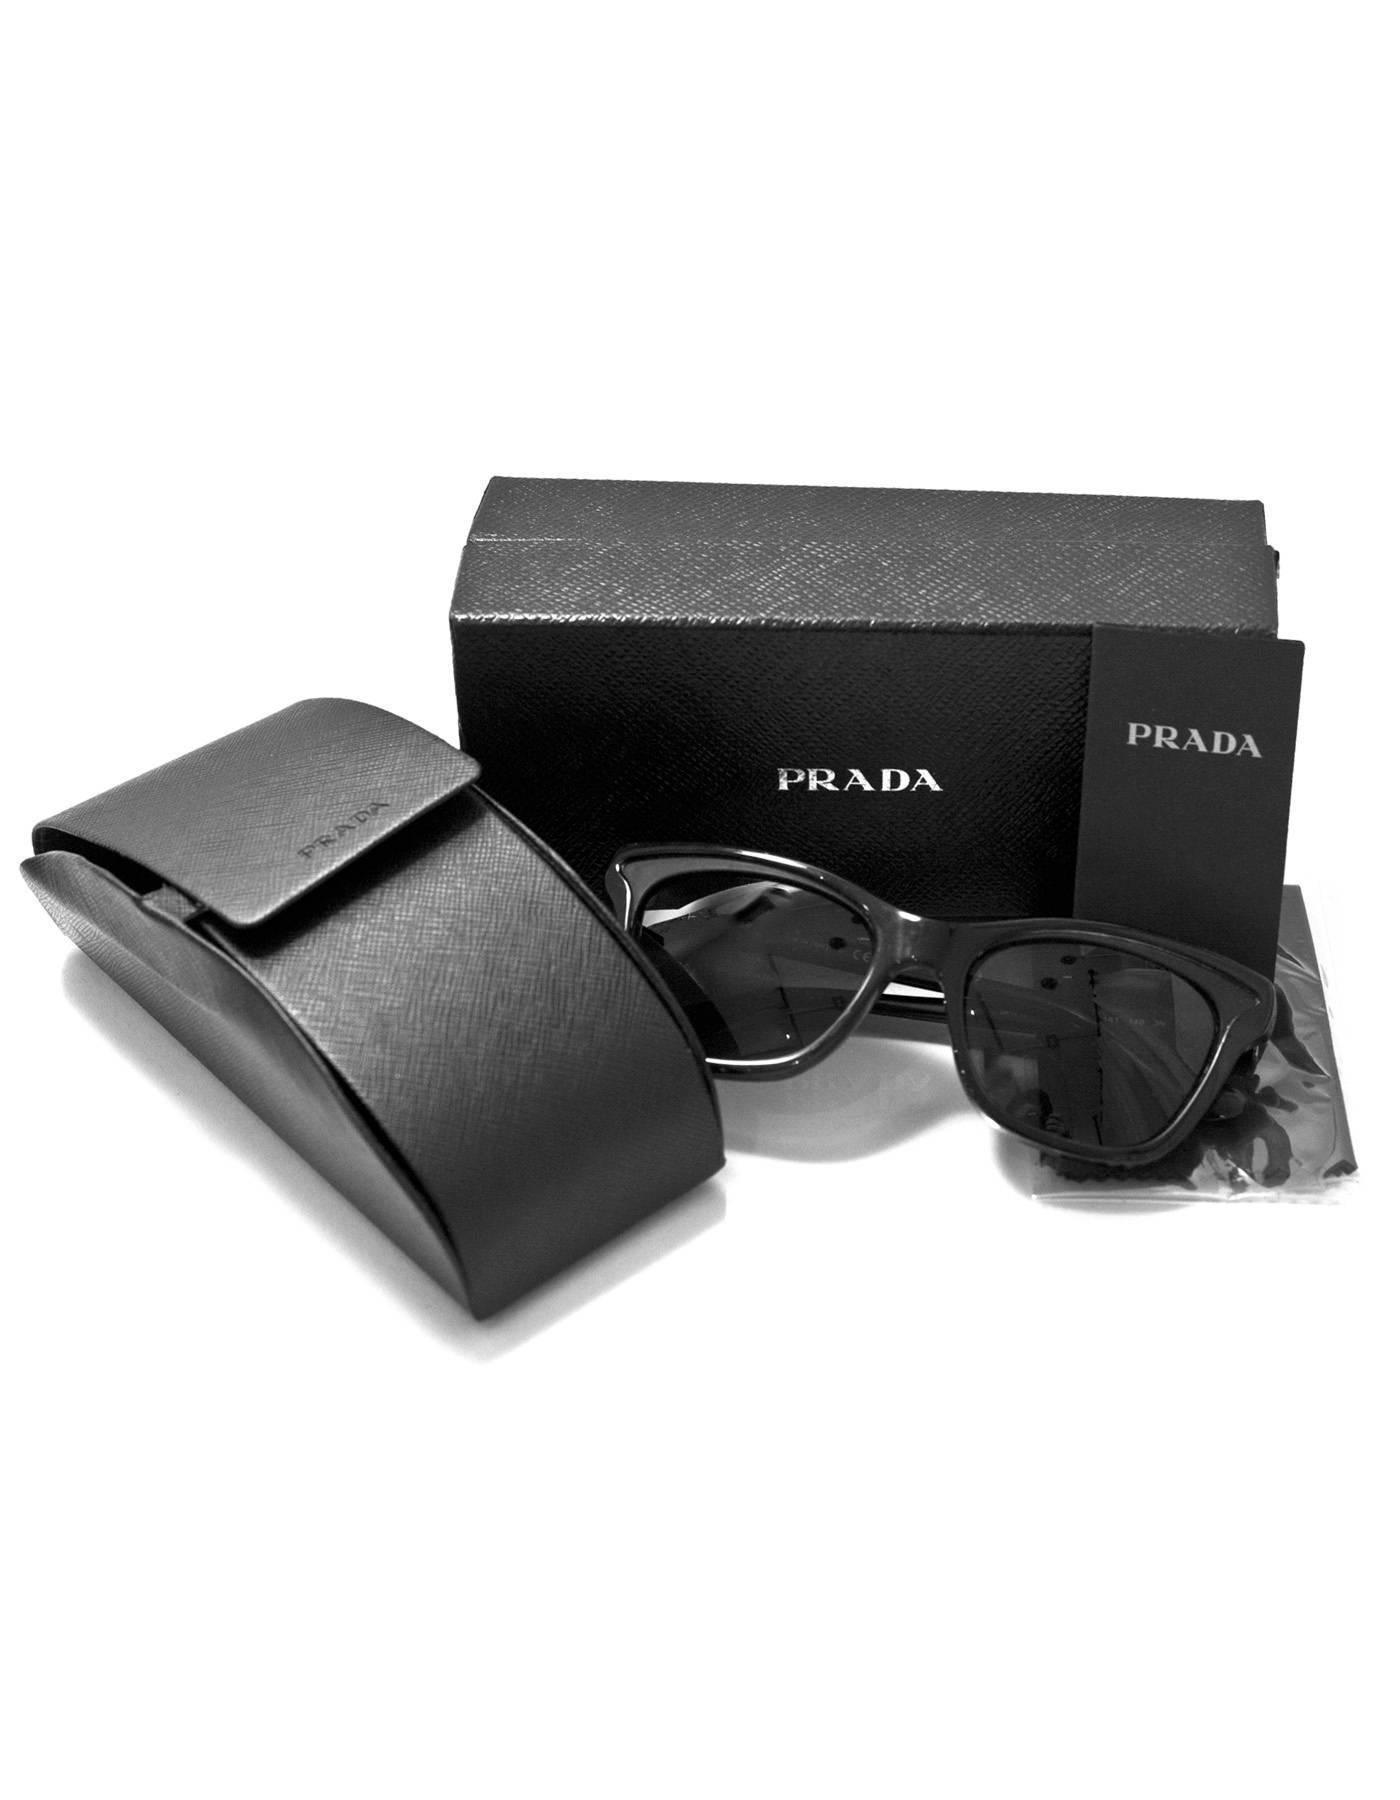 Prada Black Resin Sunglasses with Box and Case 4